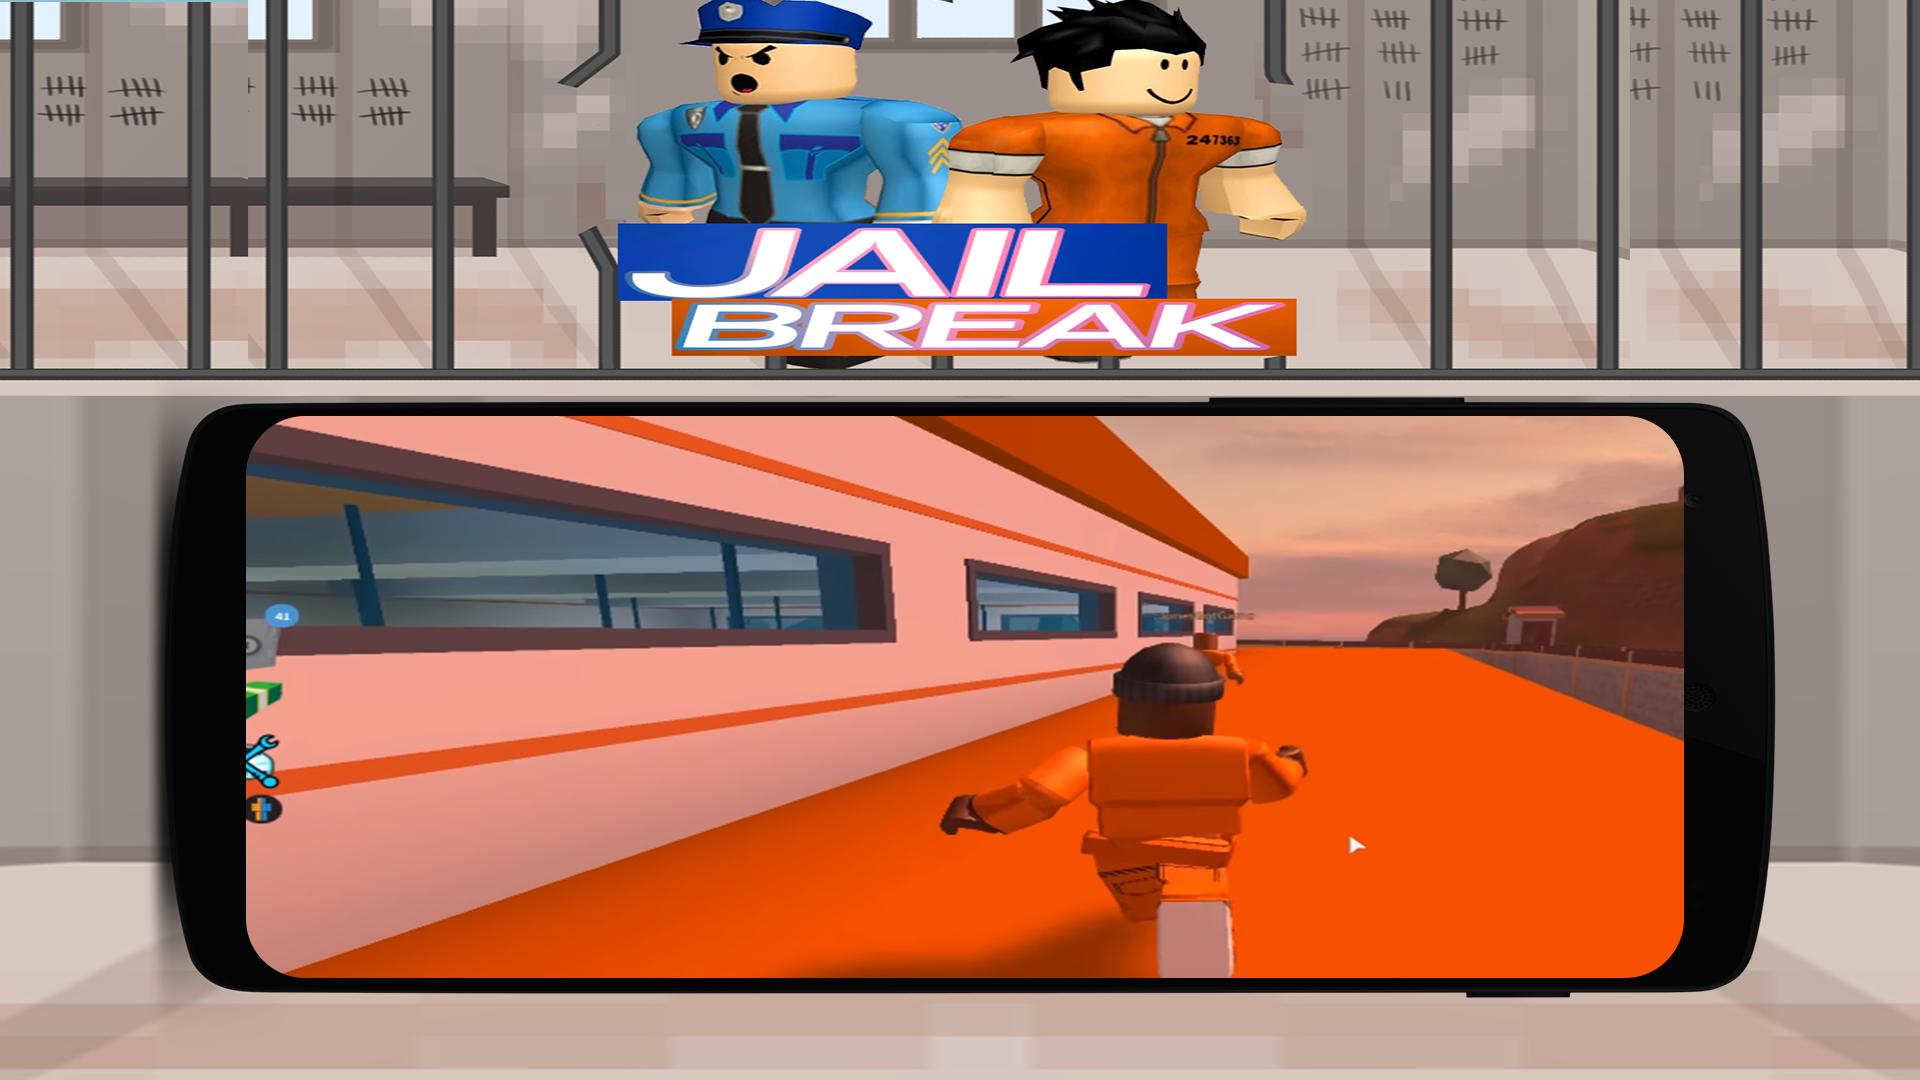 Jailbreak Rolbox S Mod Jail Break For Android Apk Download